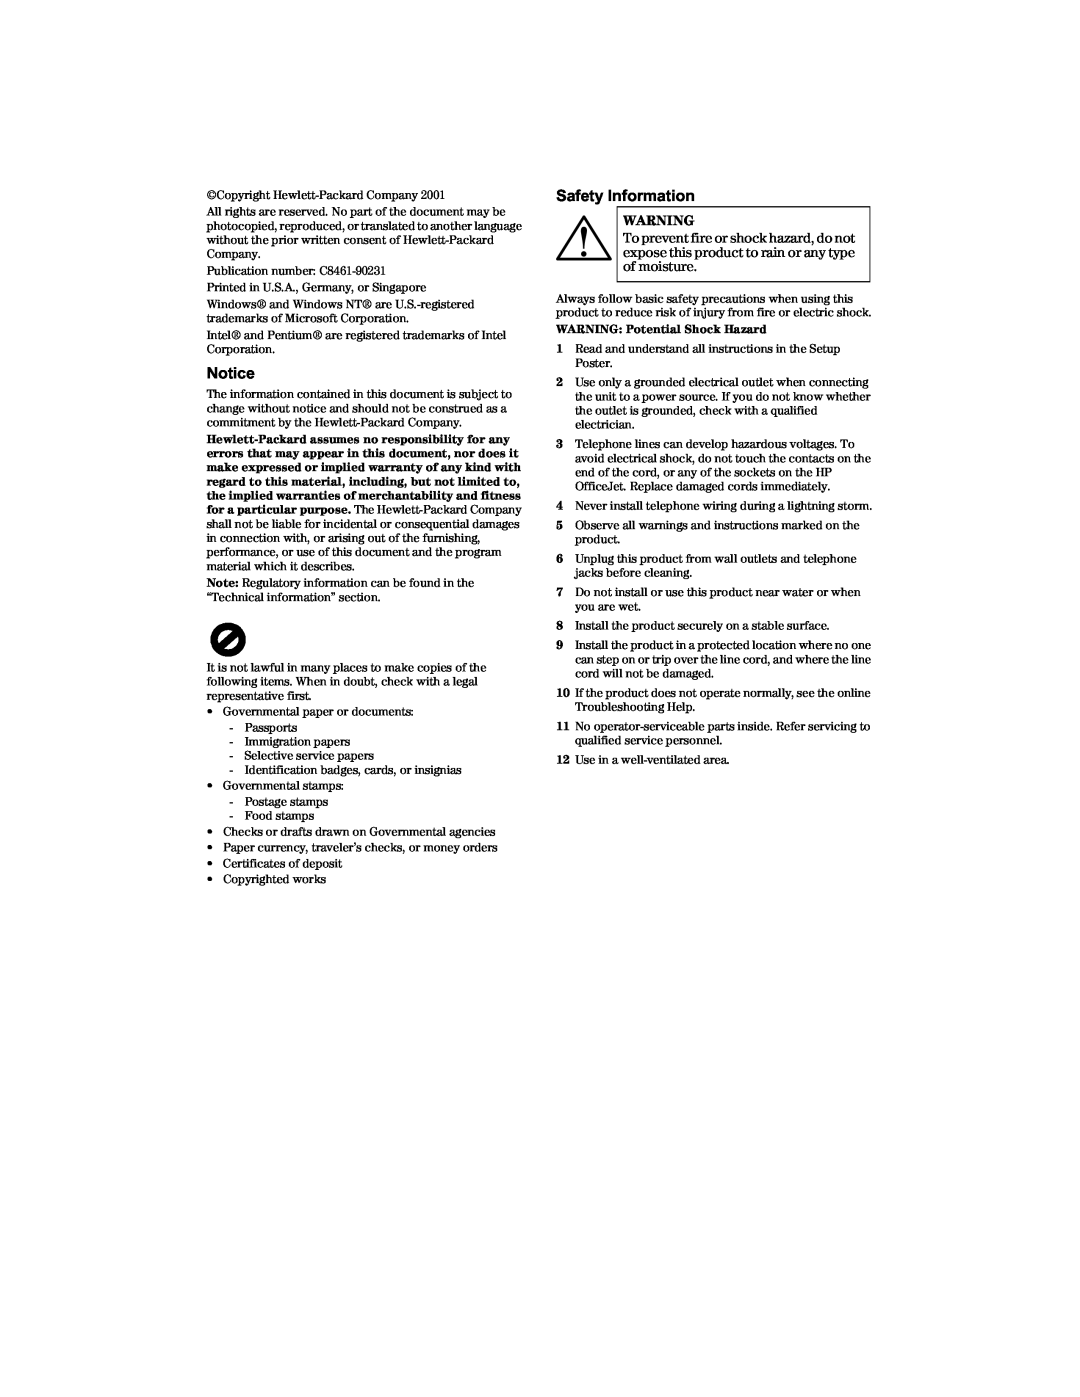 HP 1220 Fax manual 1RWLFH, 6DIHW\,QIRUPDWLRQ, WARNING Potential Shock Hazard 